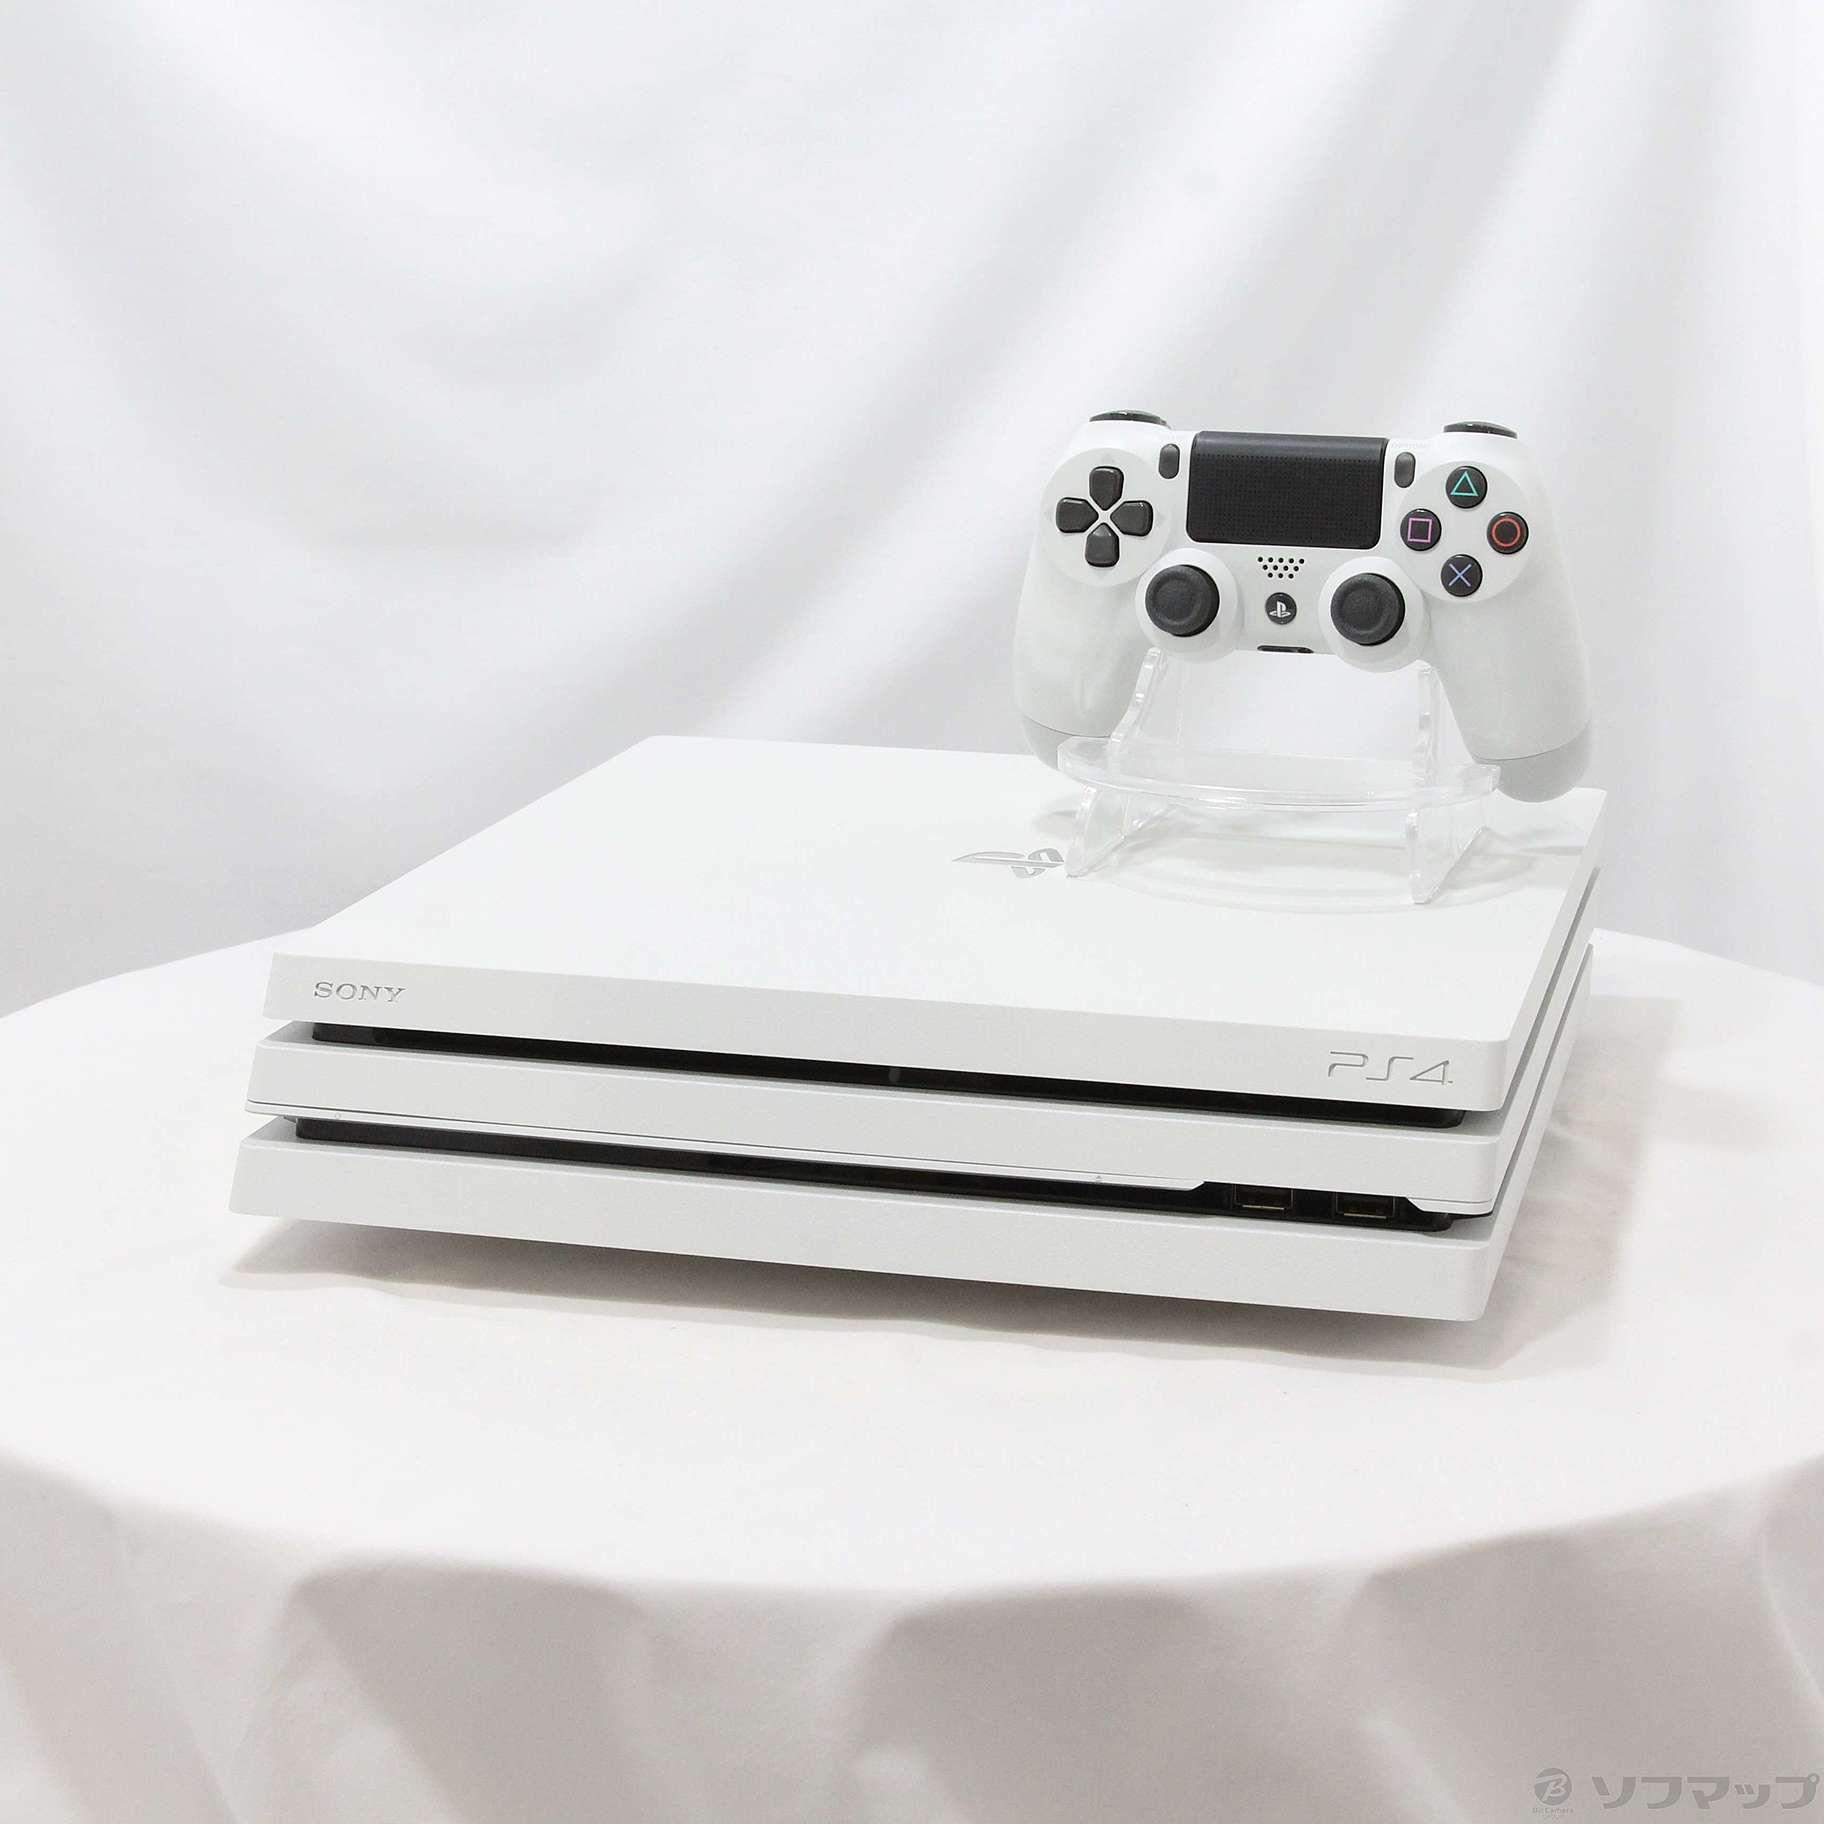 PS4 Pro CUH-7200BB02グレイシャーホワイト 美品